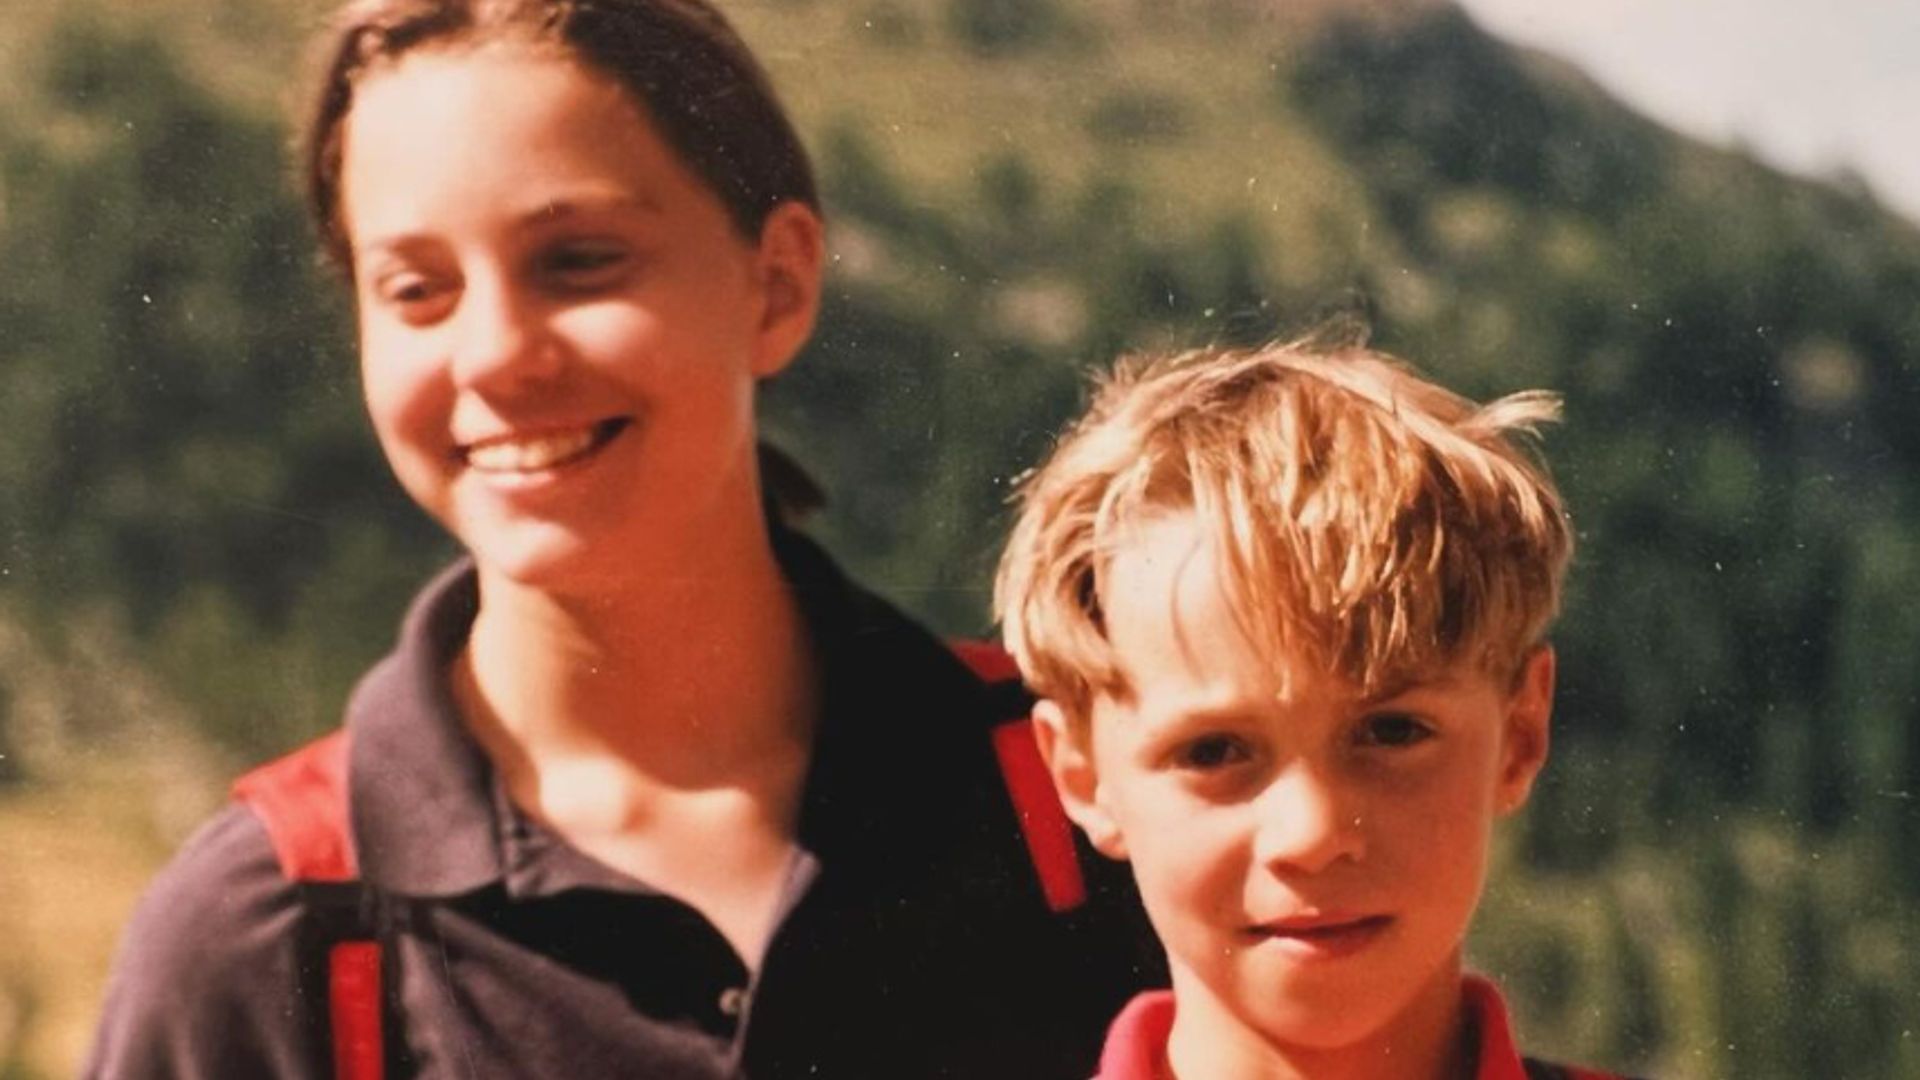 Childhood photo of James Middleton and sister Kate